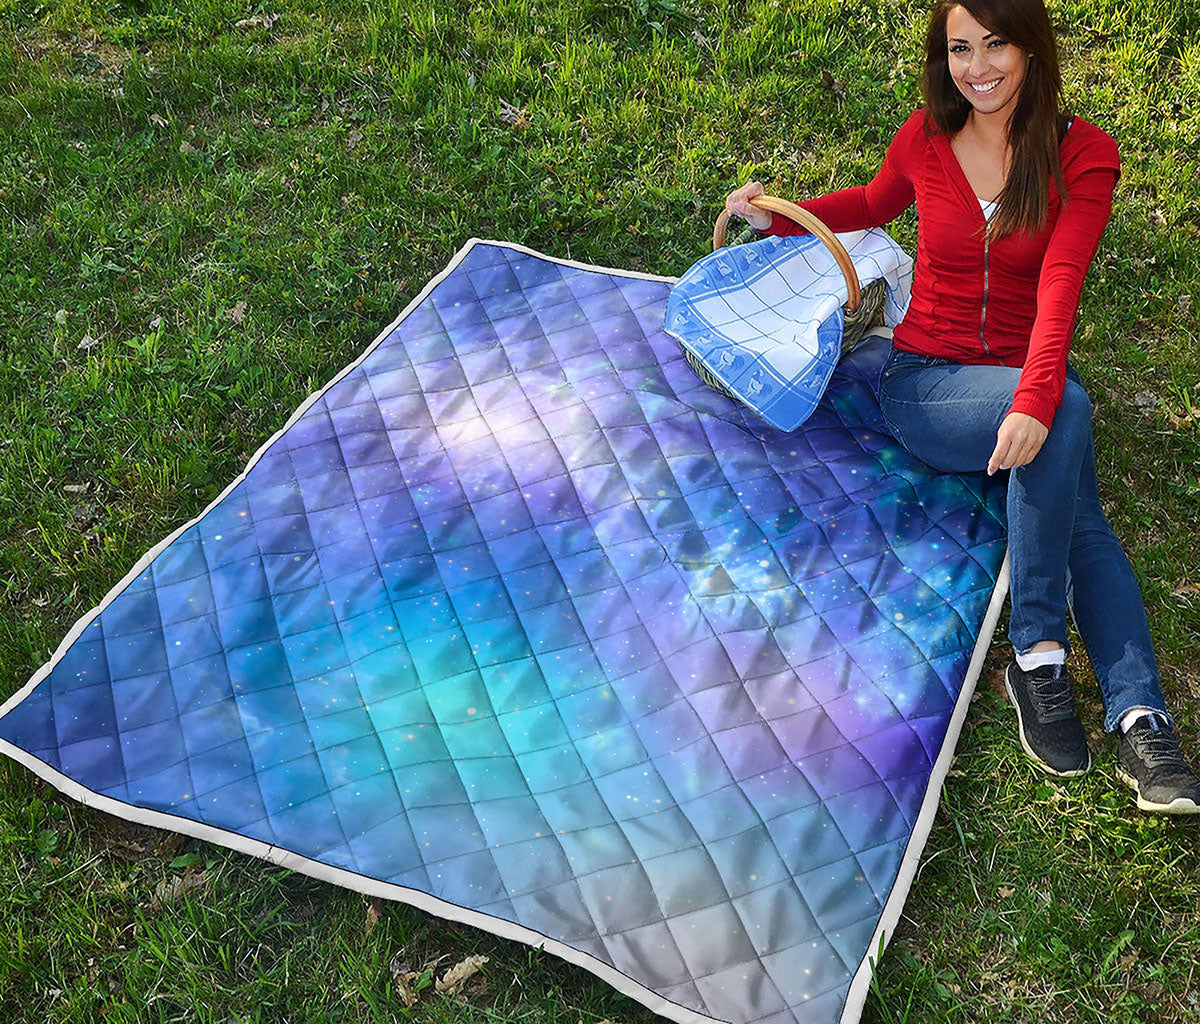 Blue Light Nebula Galaxy Space Print Quilt